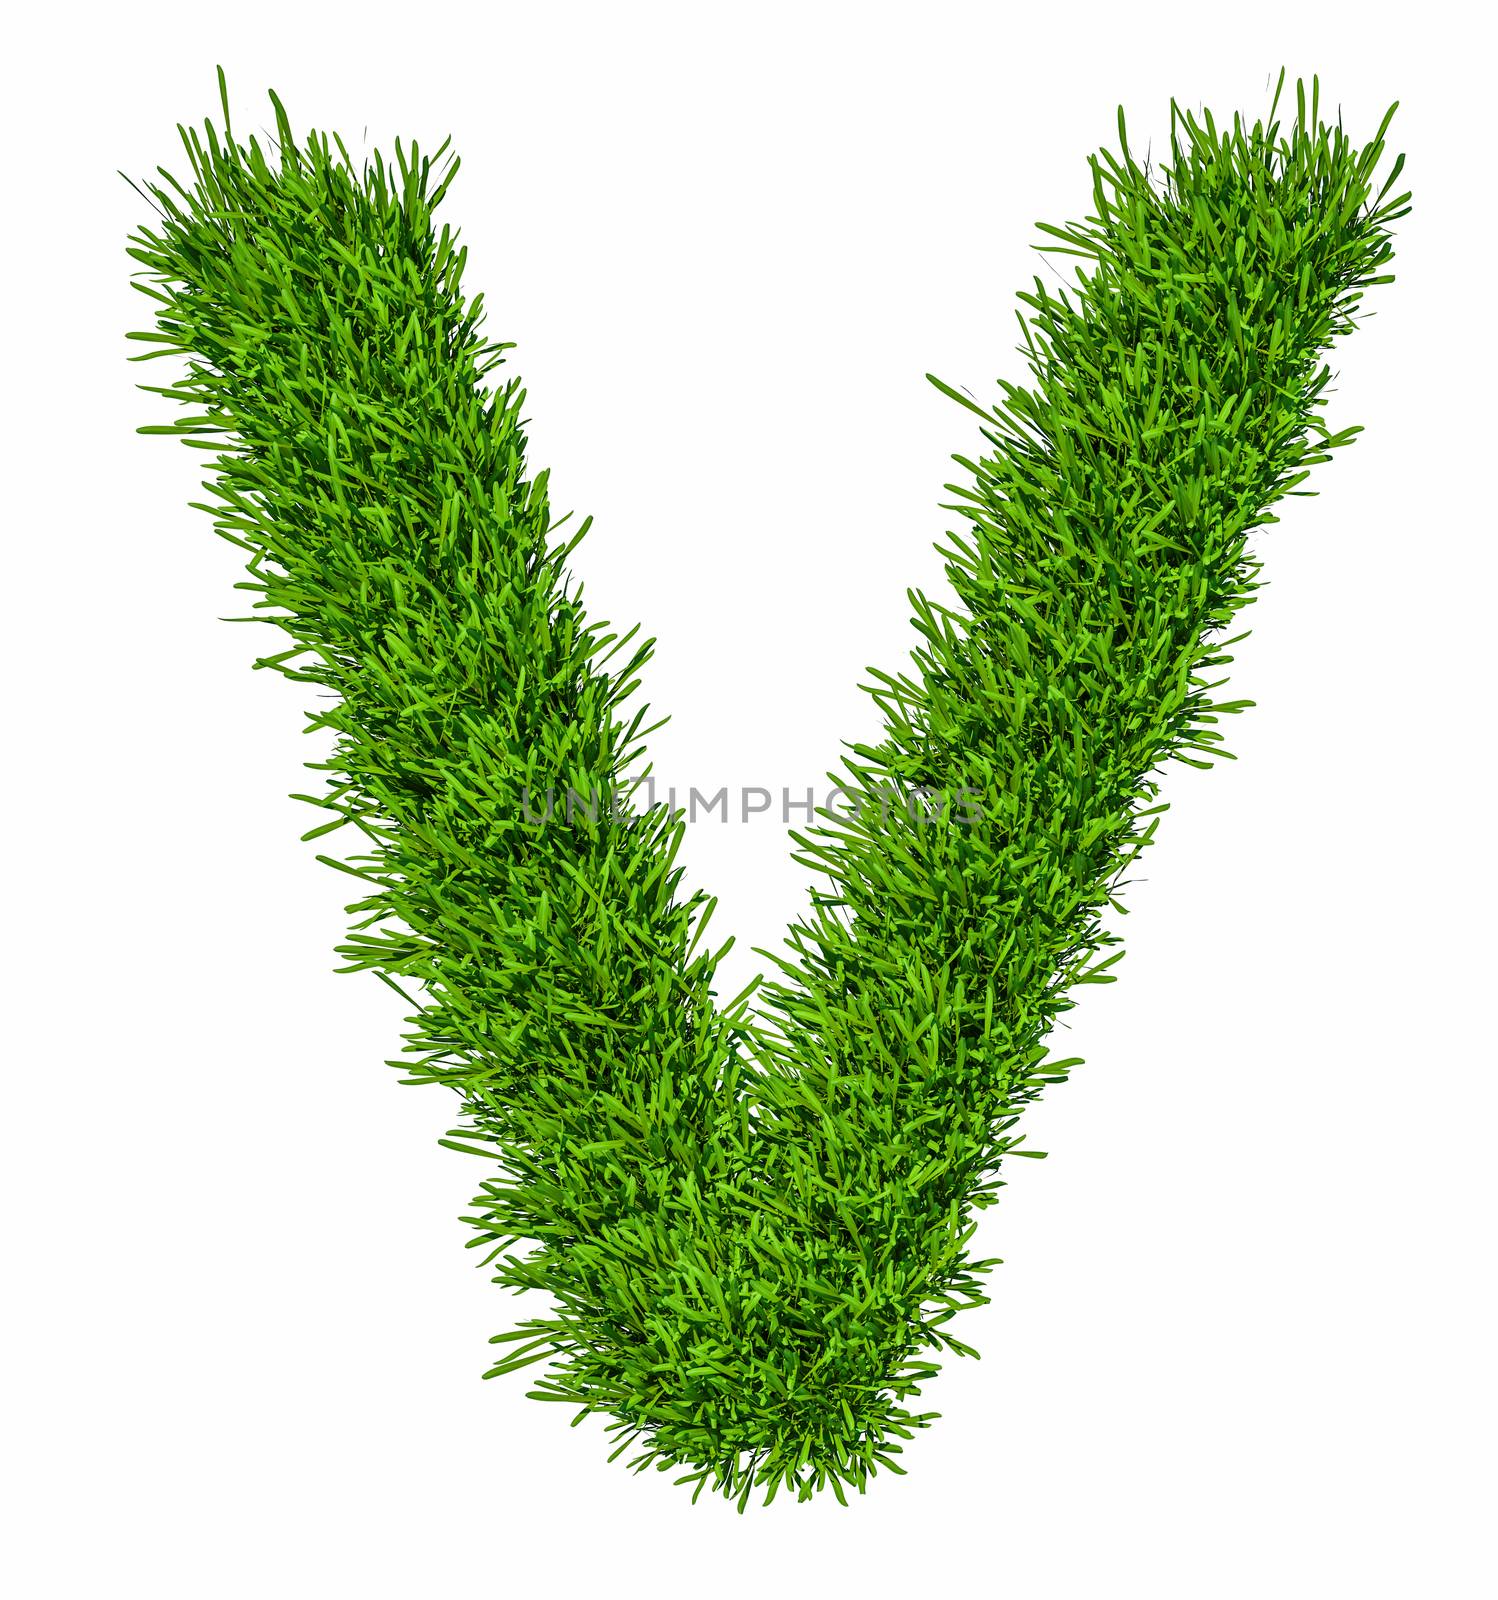 Letter of grass alphabet. 3d illustration by cherezoff